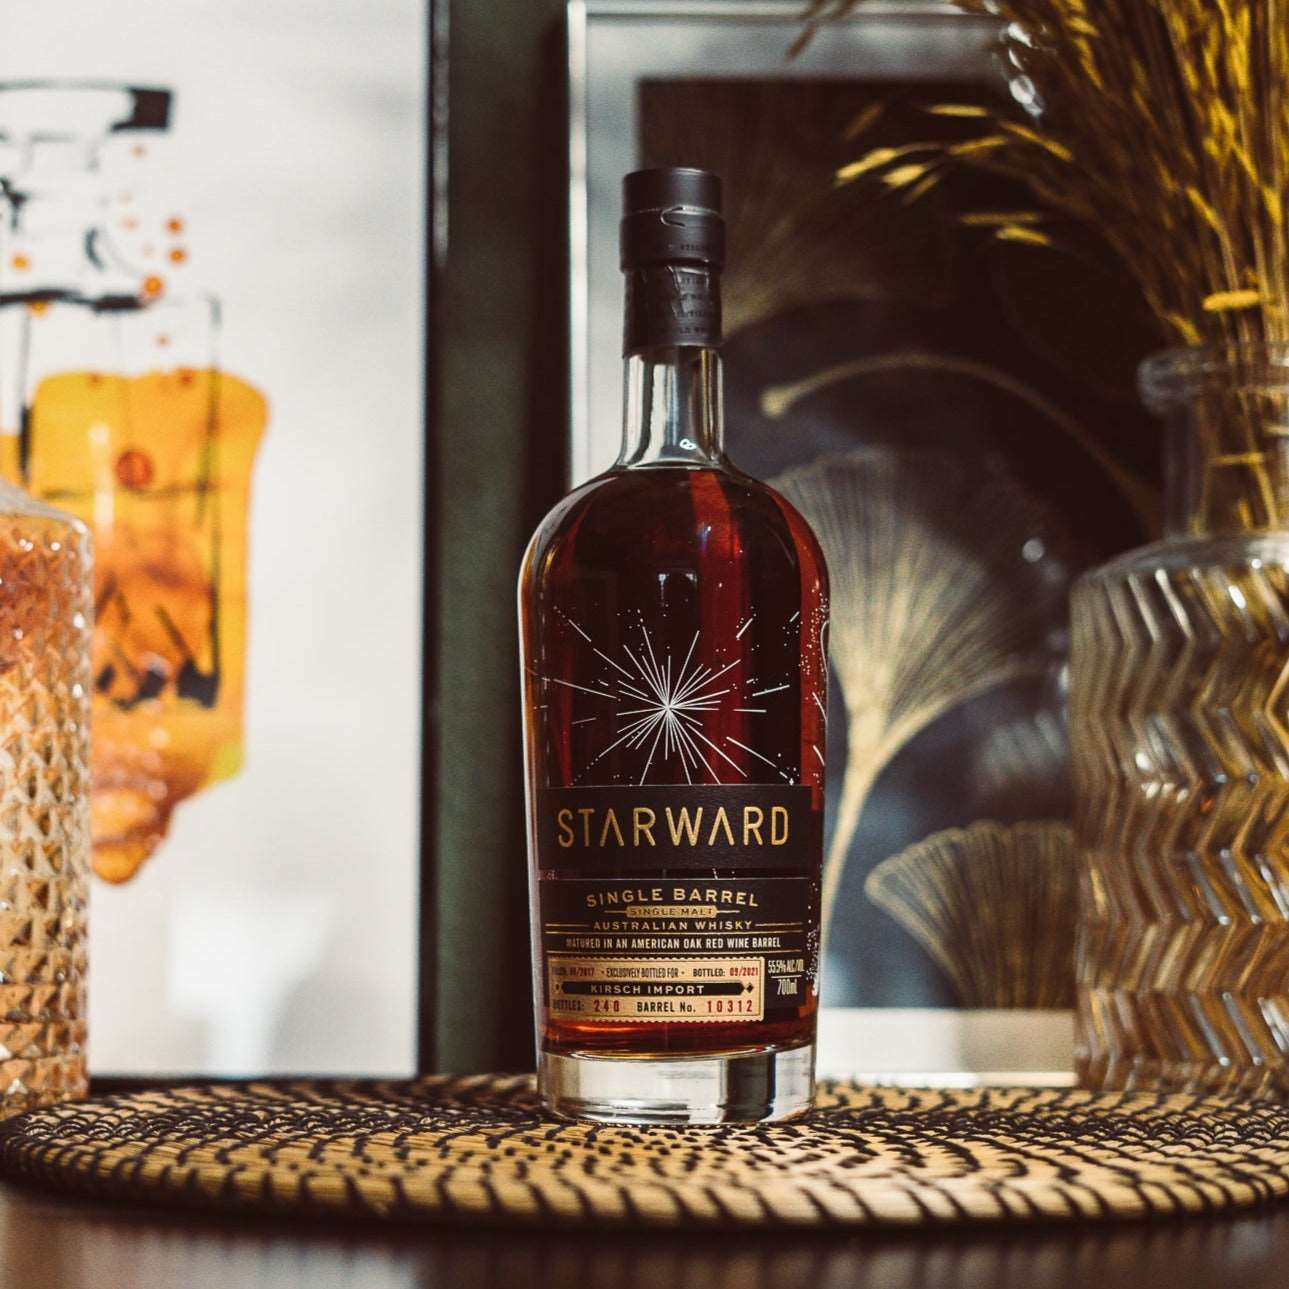 Starward | 4 Jahre | 2017/2021 | Single Barrel #10312 | Single Malt Australian Whisky | 0,7l | 55,5%GET A BOTTLE